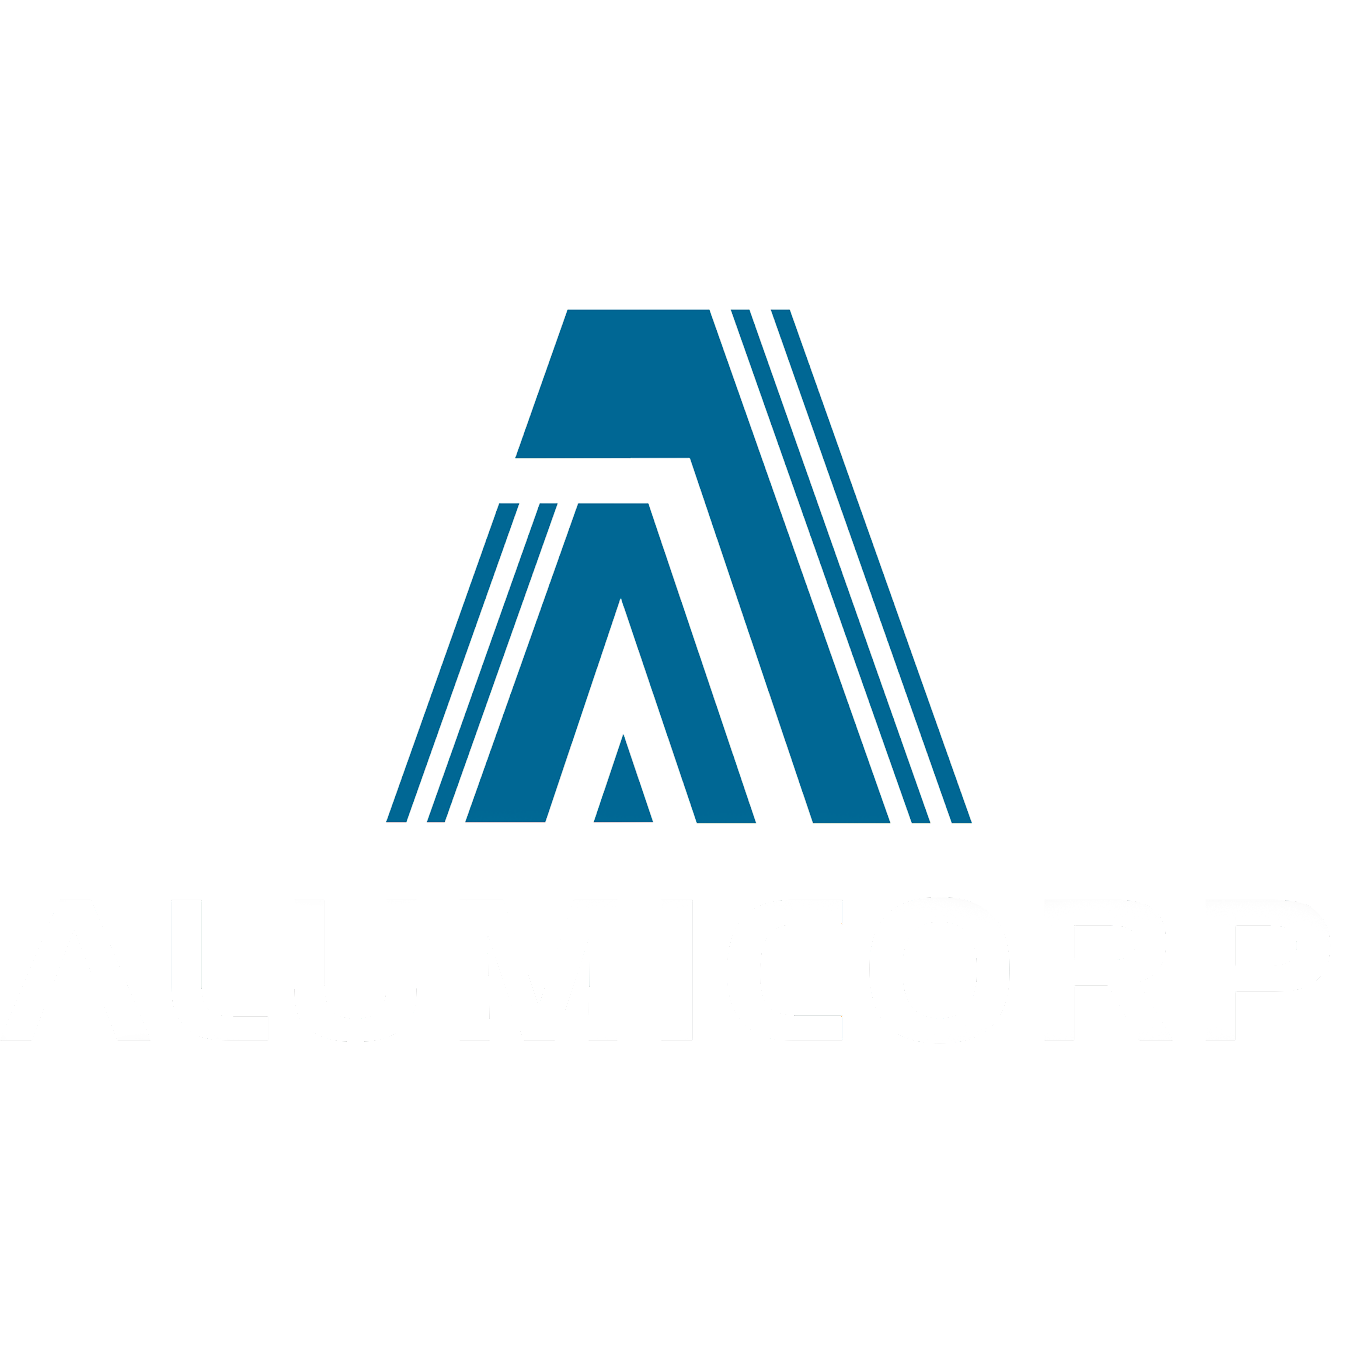 Alumicorp - Aluminium Laser Cutting - CNC Routing - Bending - Powder Coating